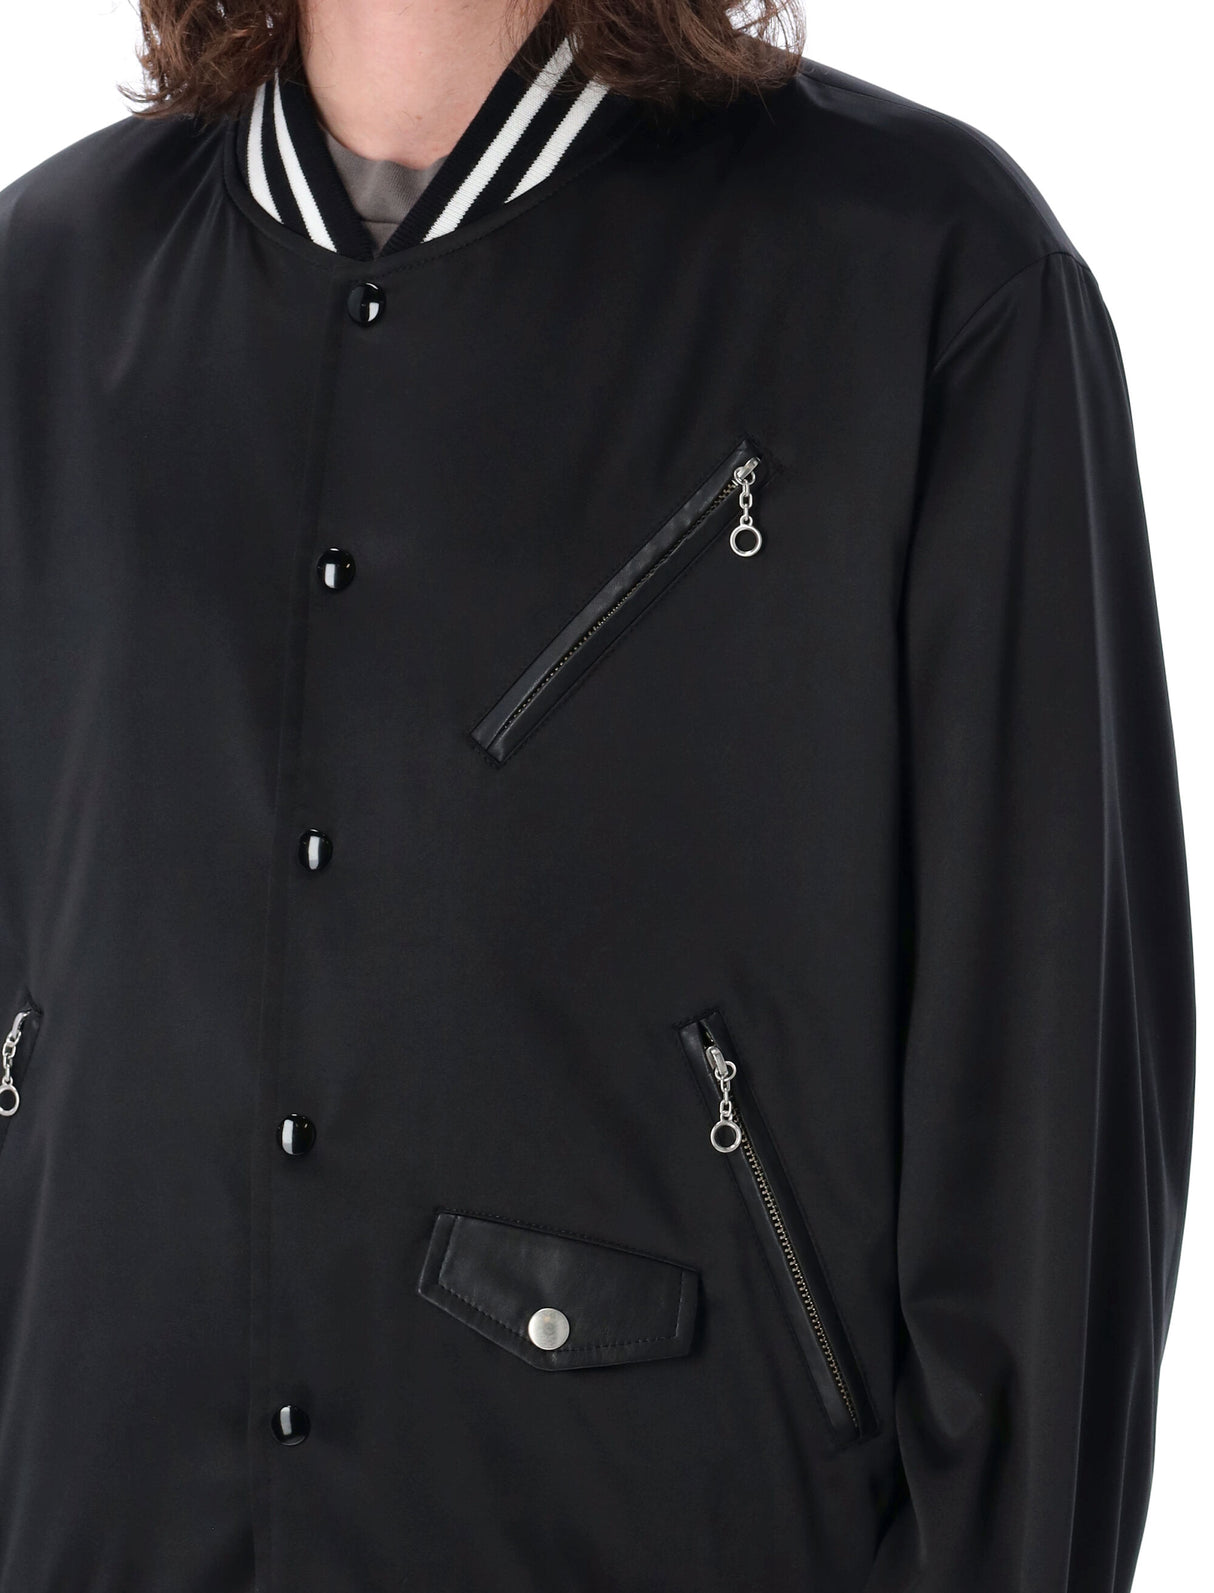 UNDERCOVER Men's Black Varsity Jacket for Fashionable Layering